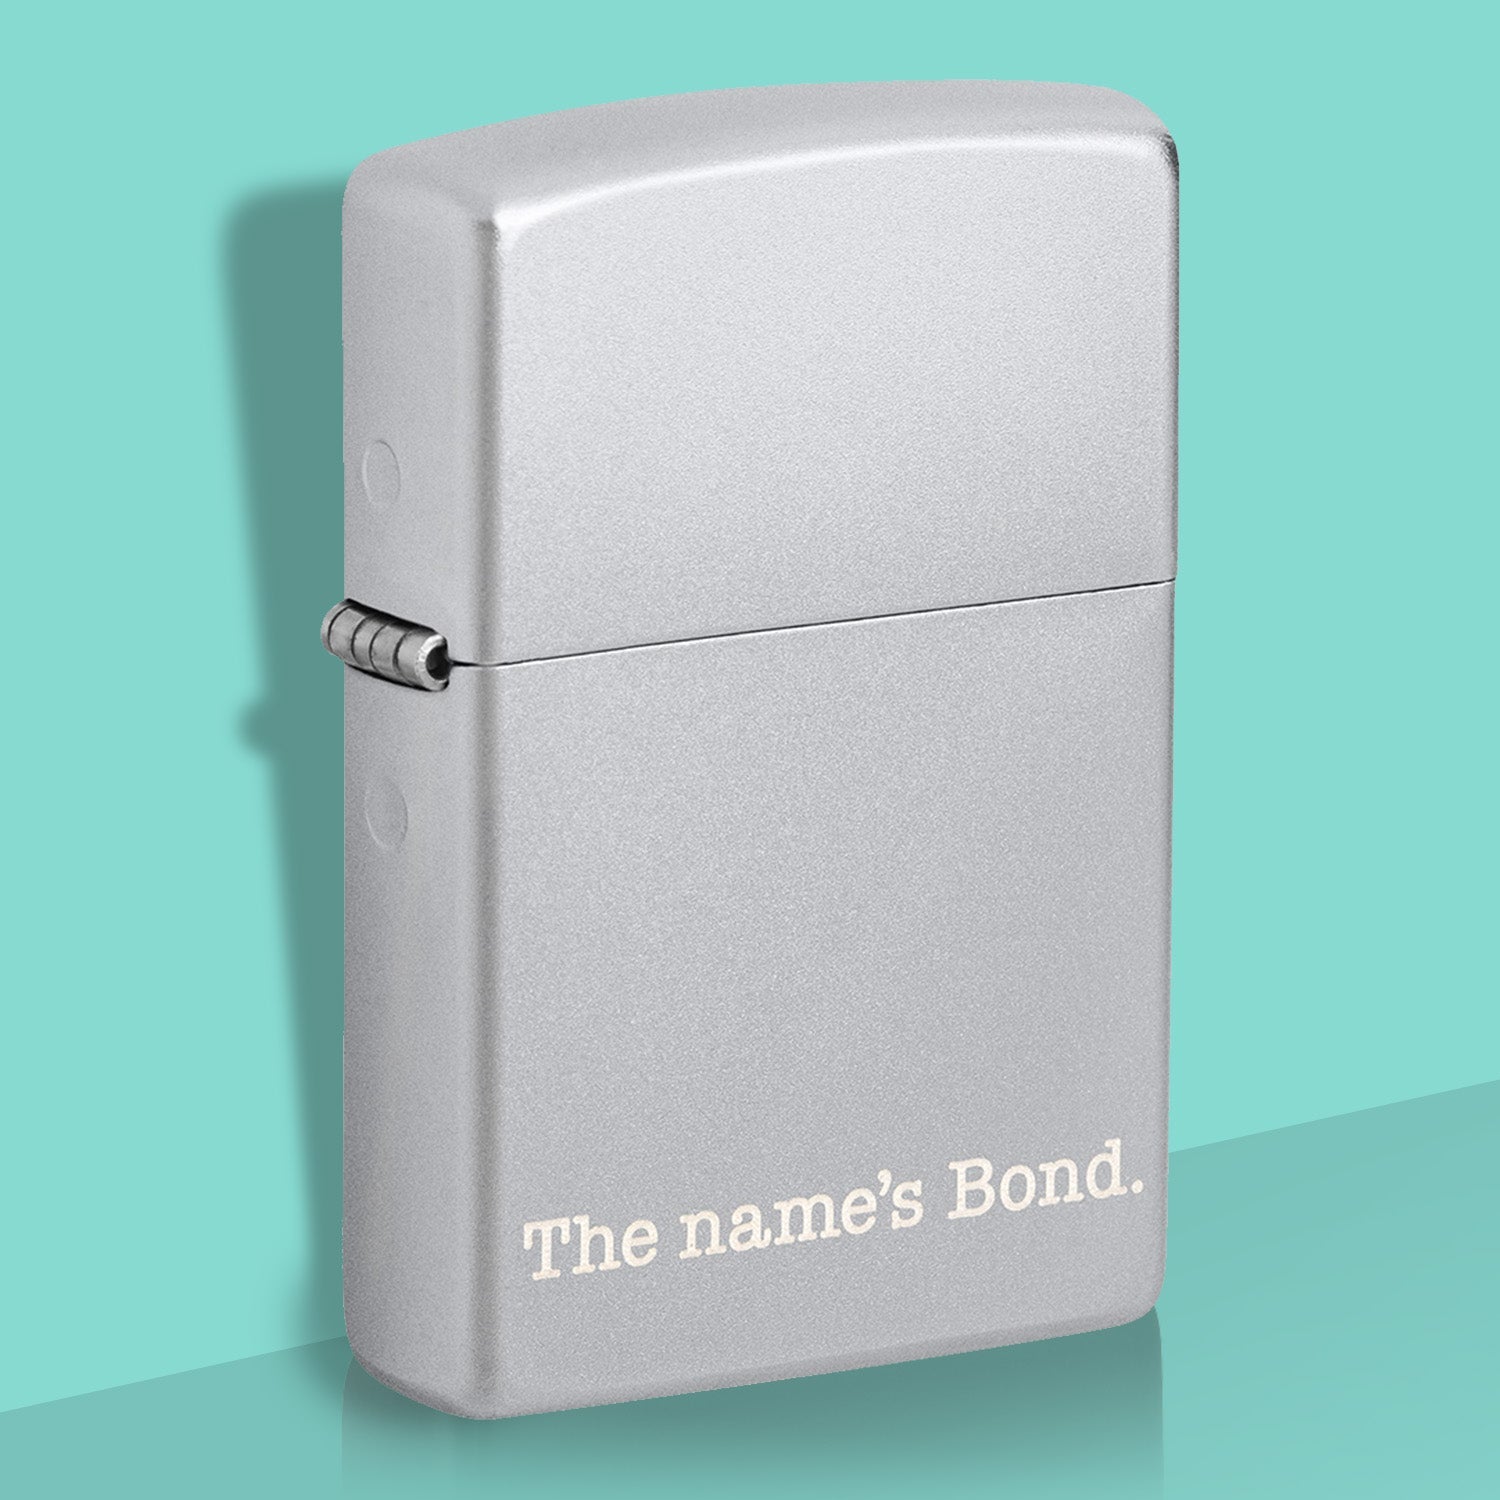 James Bond "The Name's Bond" Lighter - By Zippo 007Store